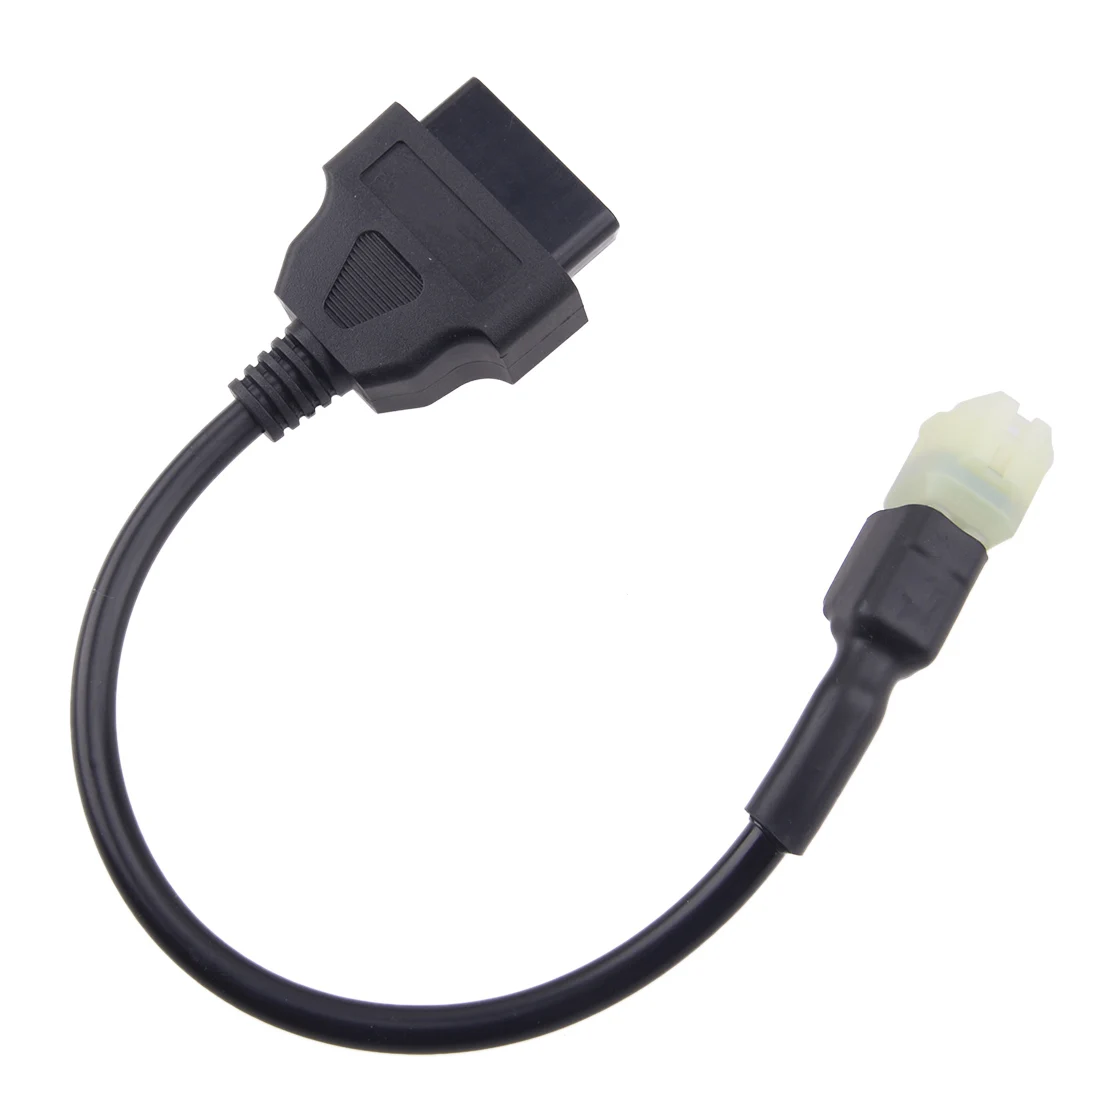 

Motorbike 4 Pin OBD2 Diagnostic Code Reader Cable Adapter Fit for Honda ATV CB1100 NC750 CRF1000 CBR1000RR CBR600RR VFR 800